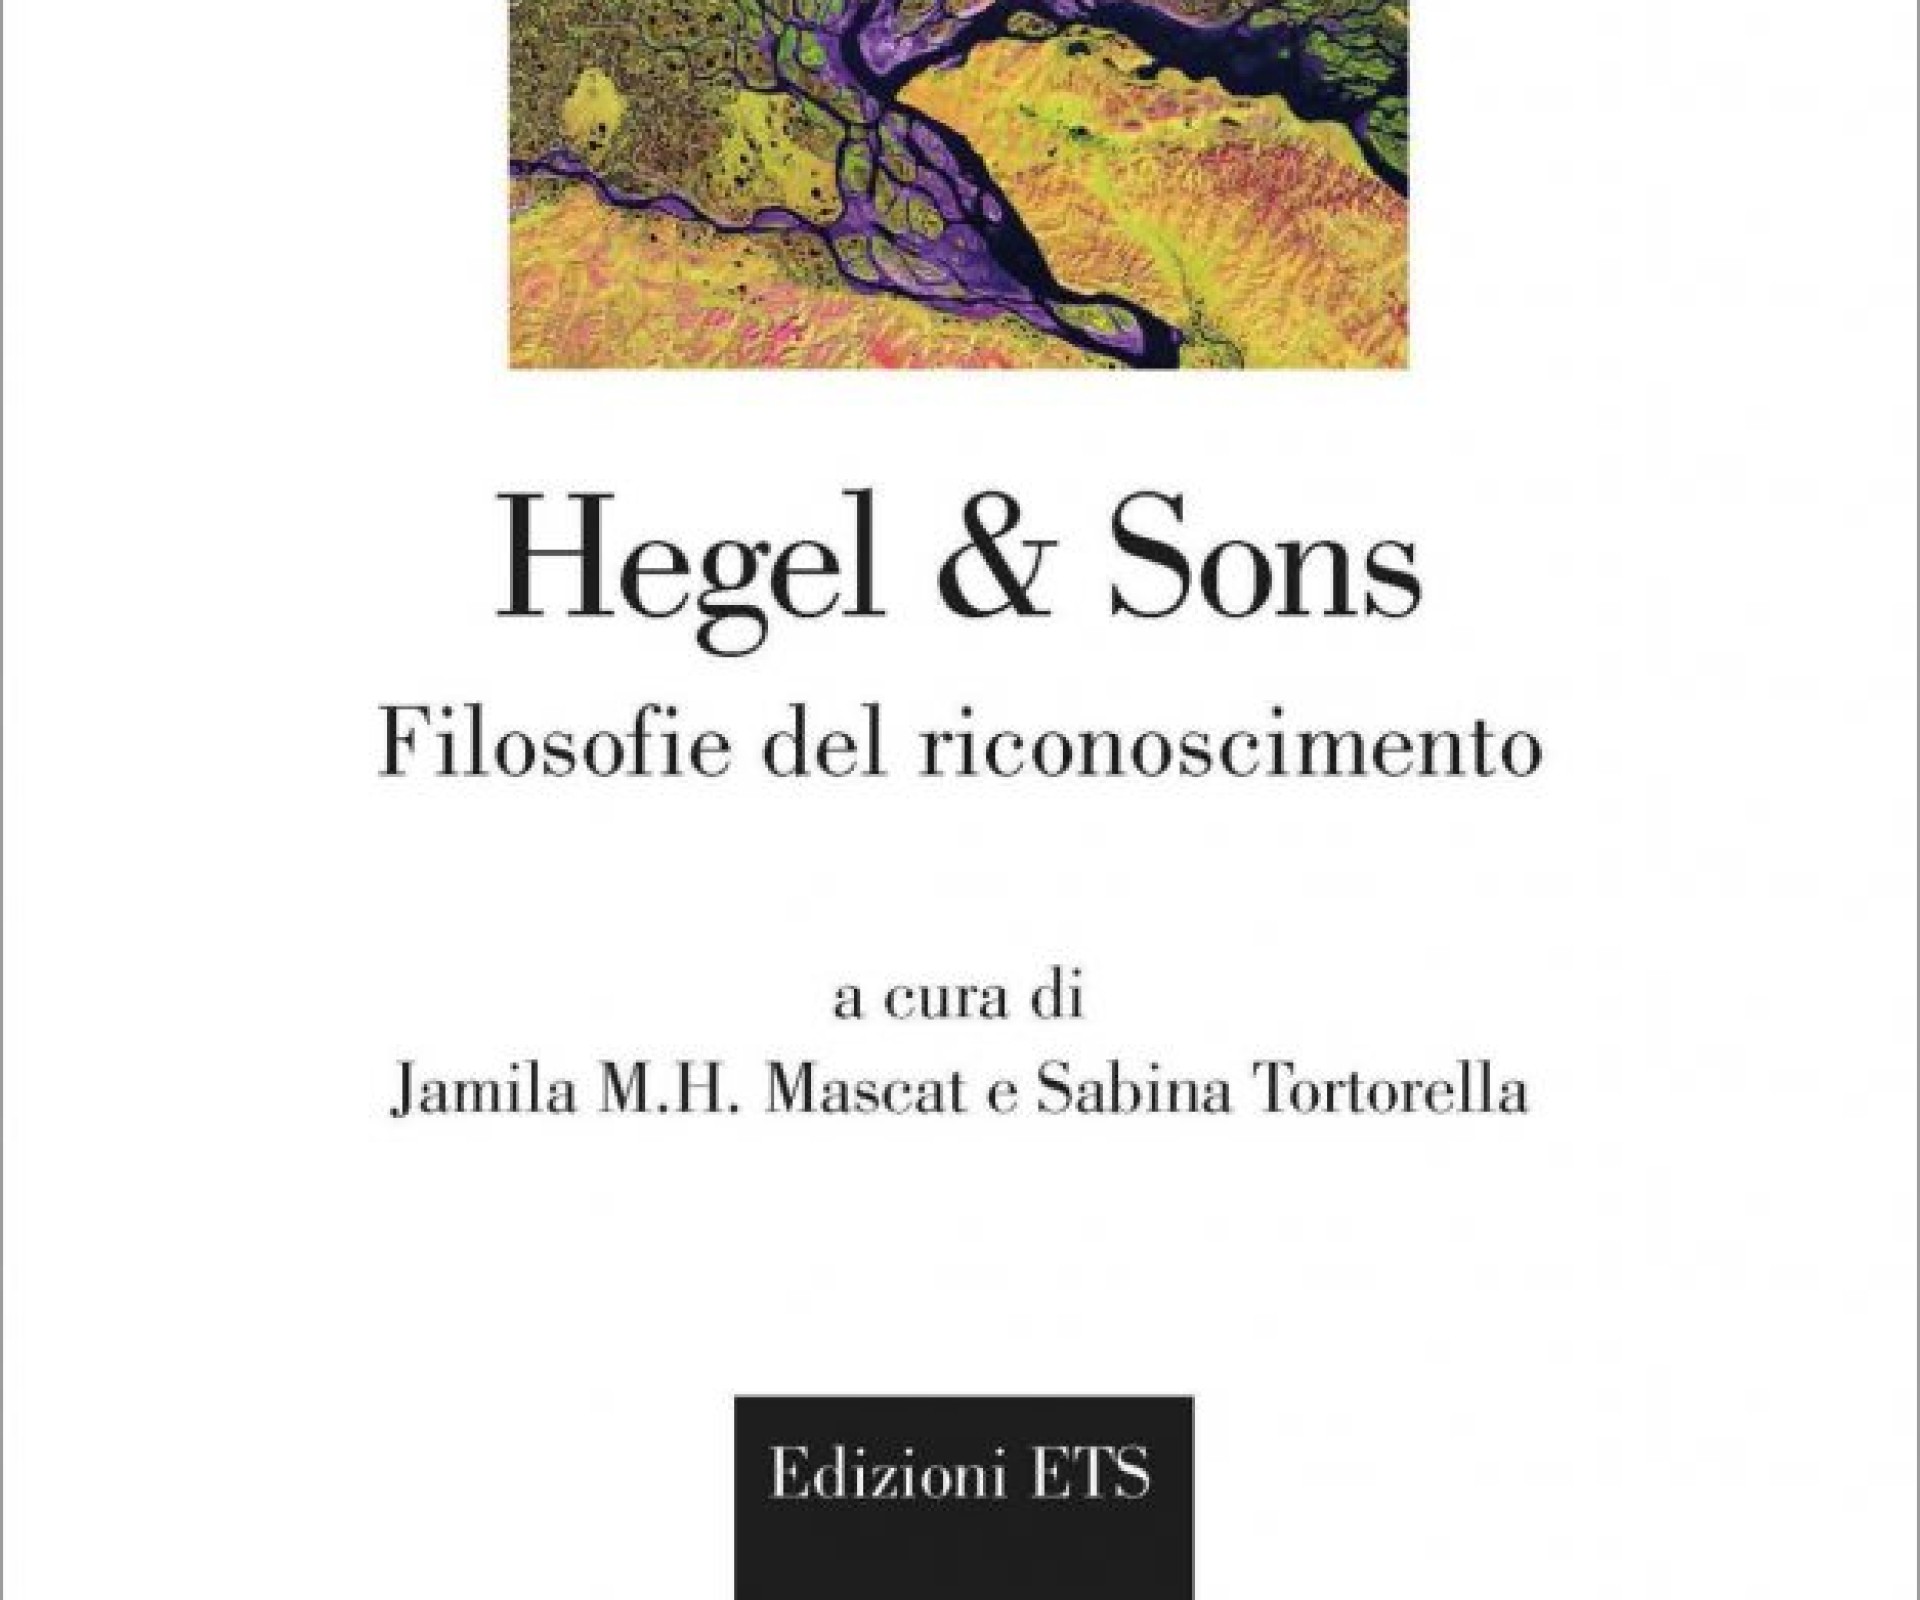 HEGEL & SONS Filosofie del riconoscimento